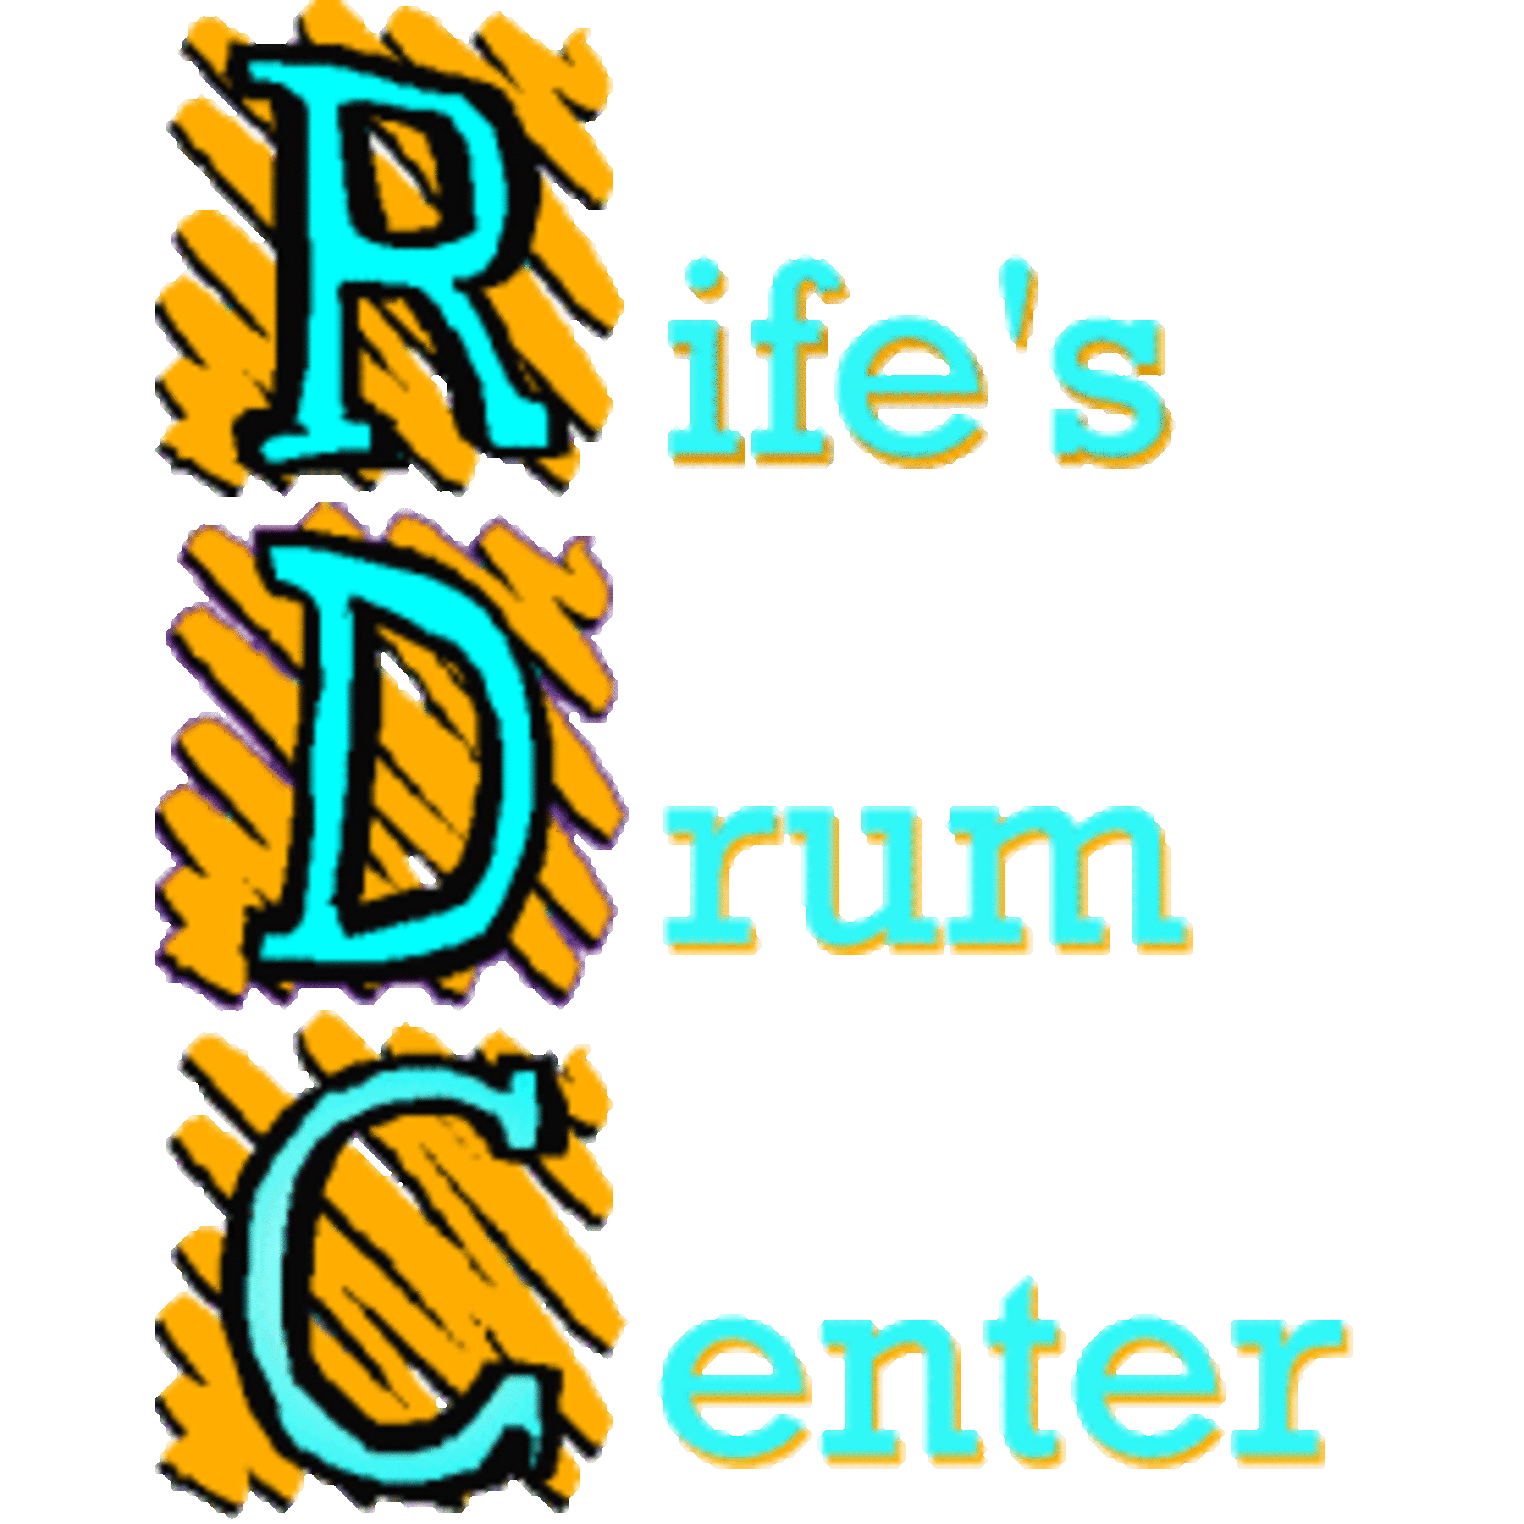 Rife's Drum Center